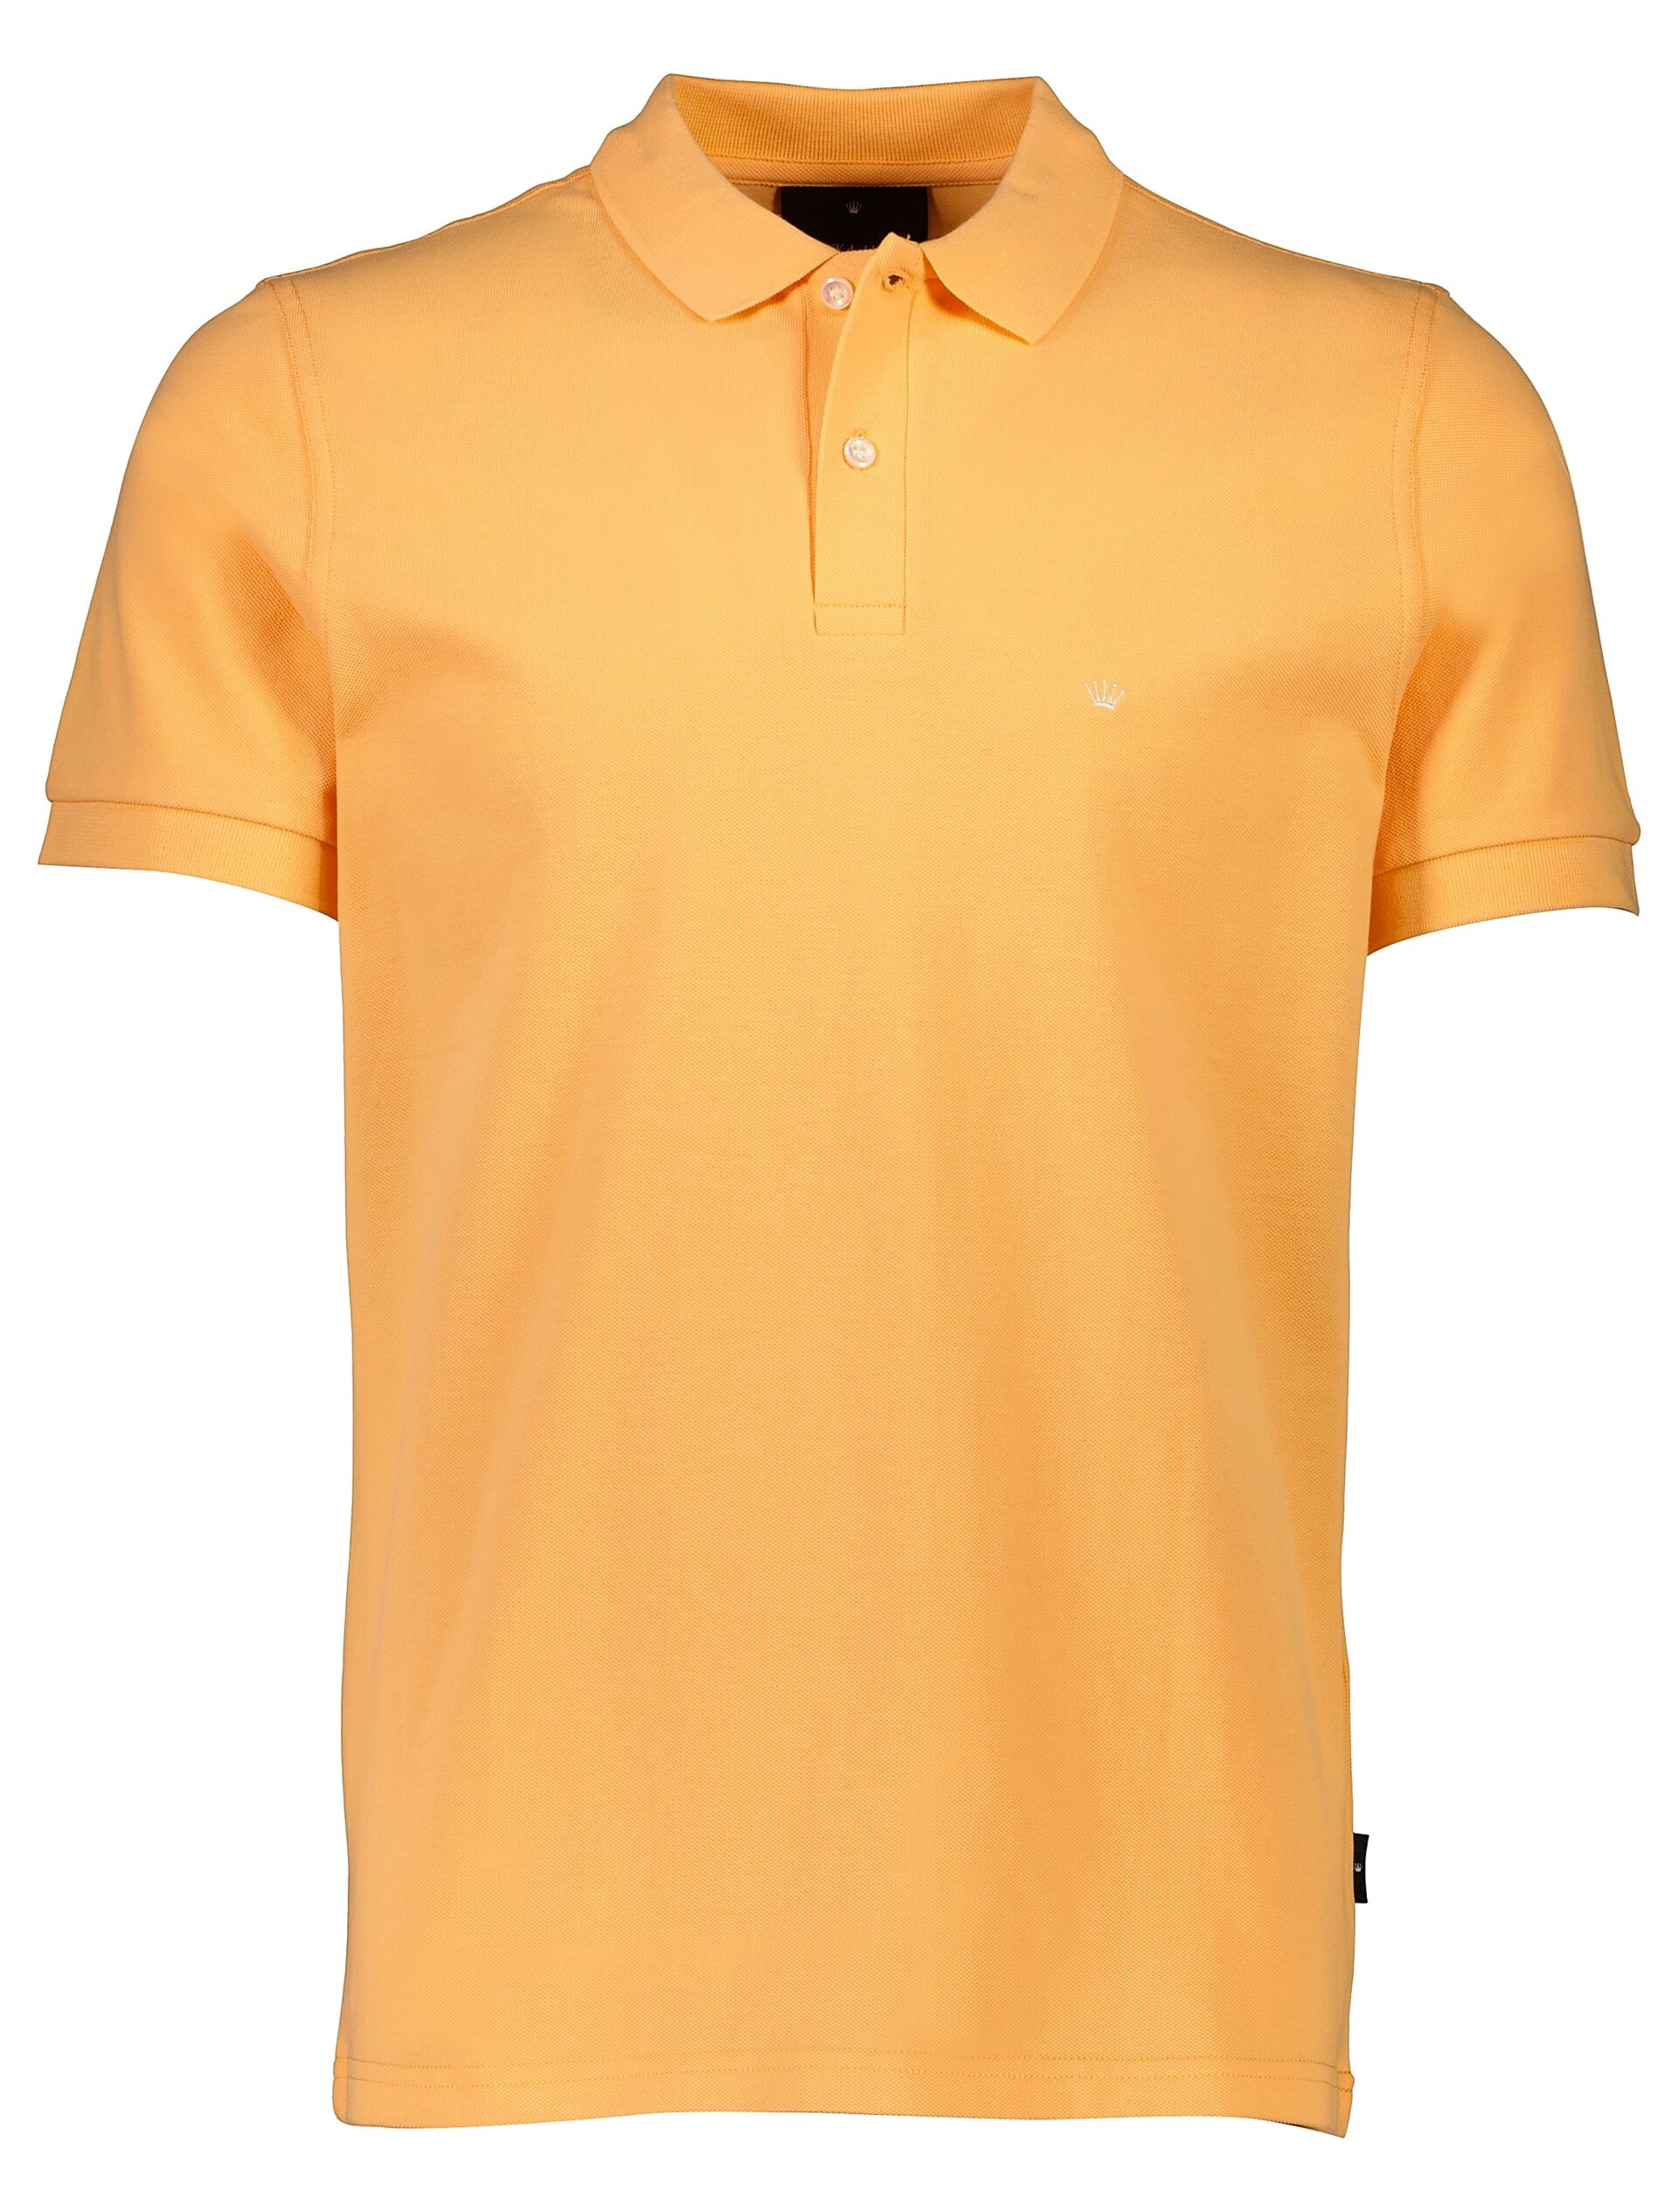 Junk de Luxe Poloshirt orange / lt apricot